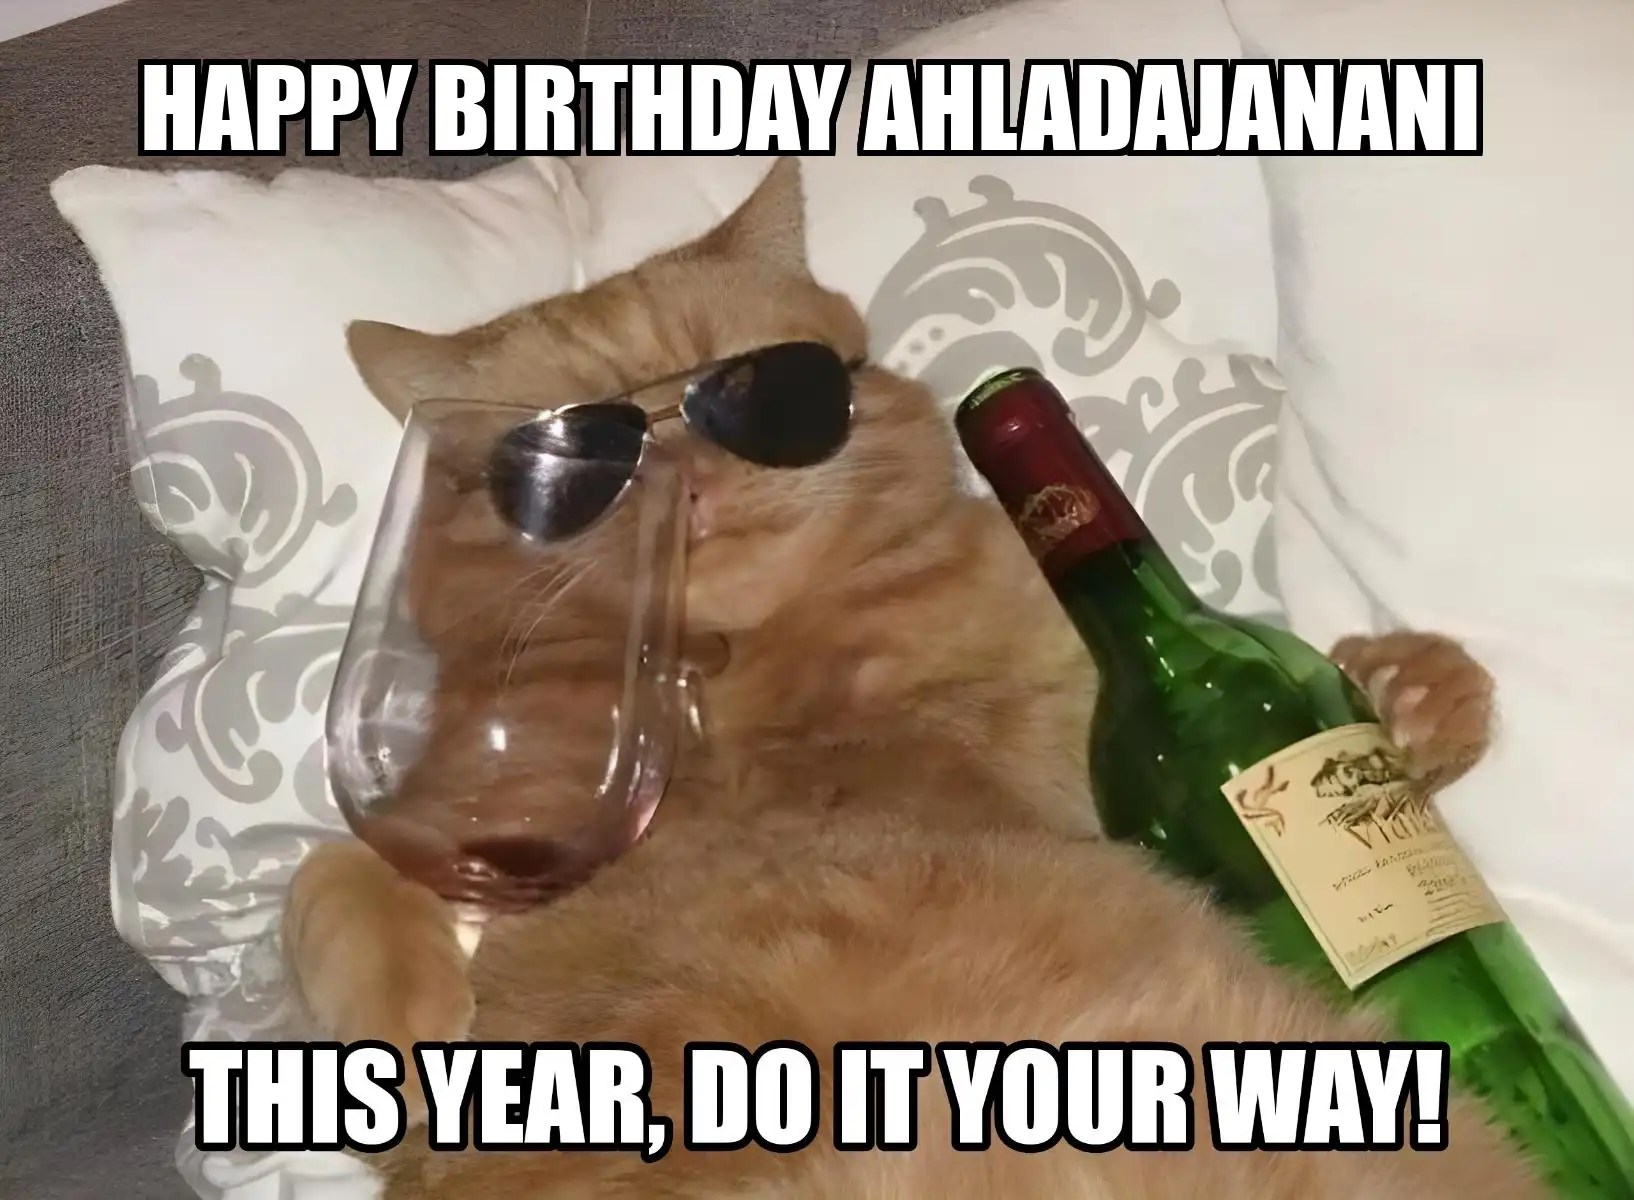 Happy Birthday Ahladajanani This Year Do It Your Way Meme